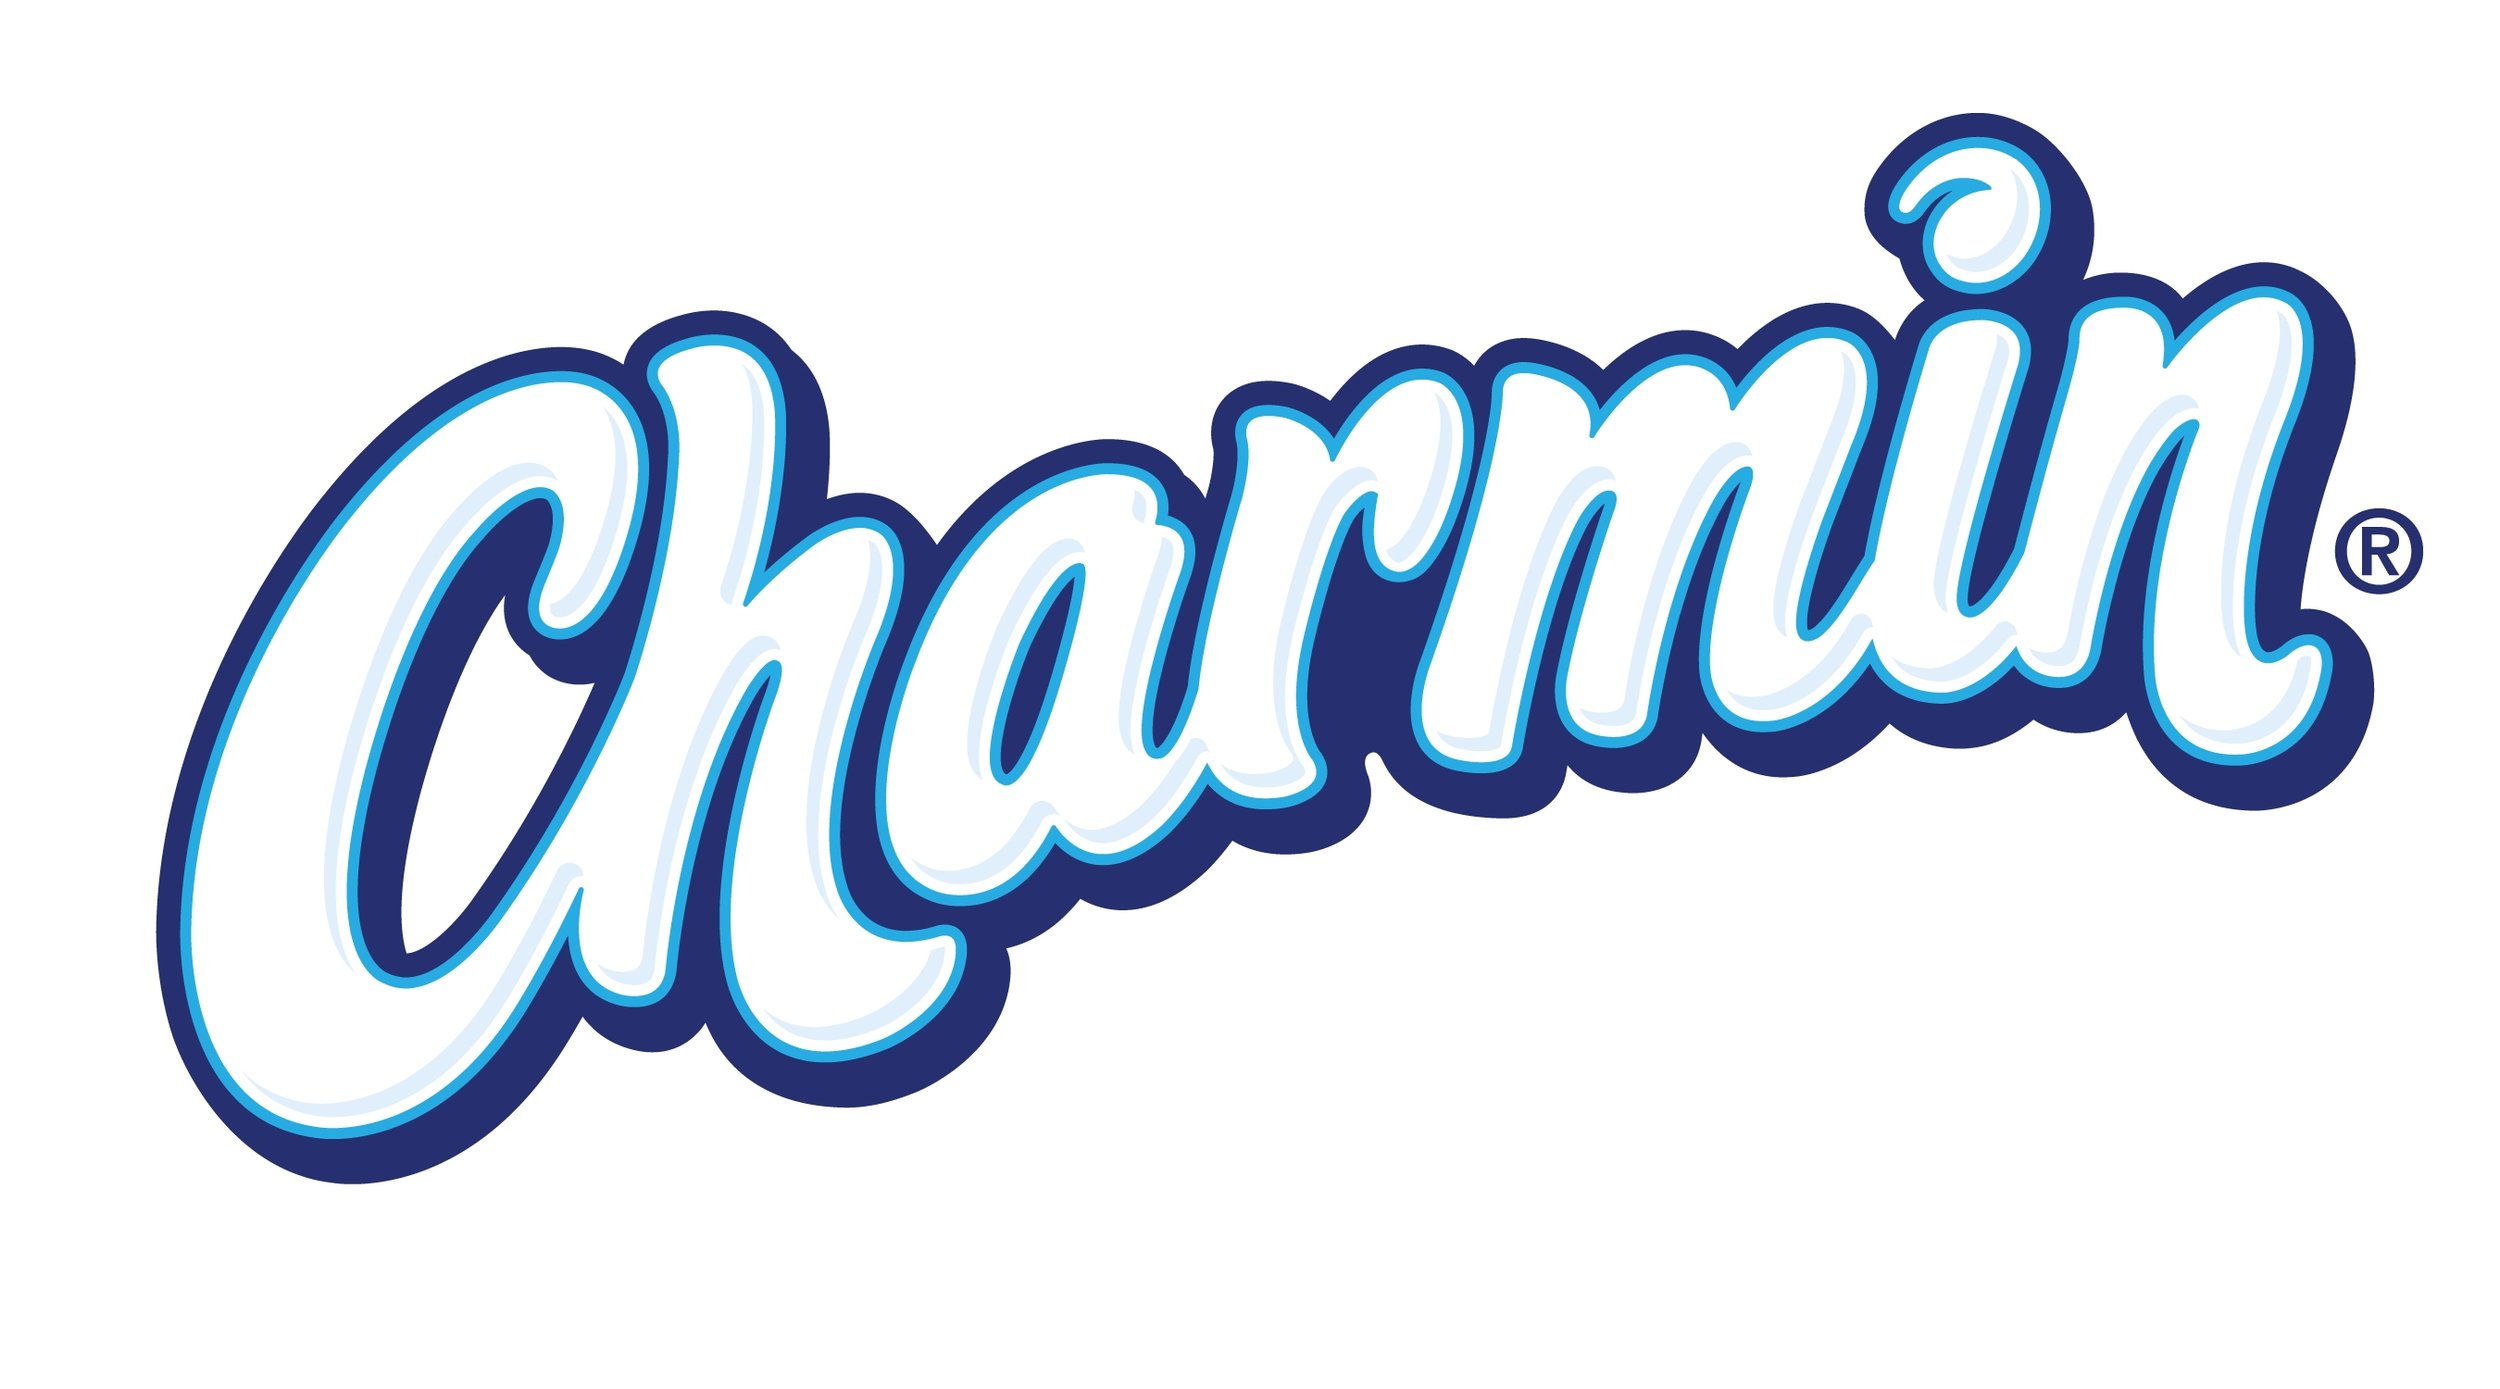 Charmin_logo_2.jpg